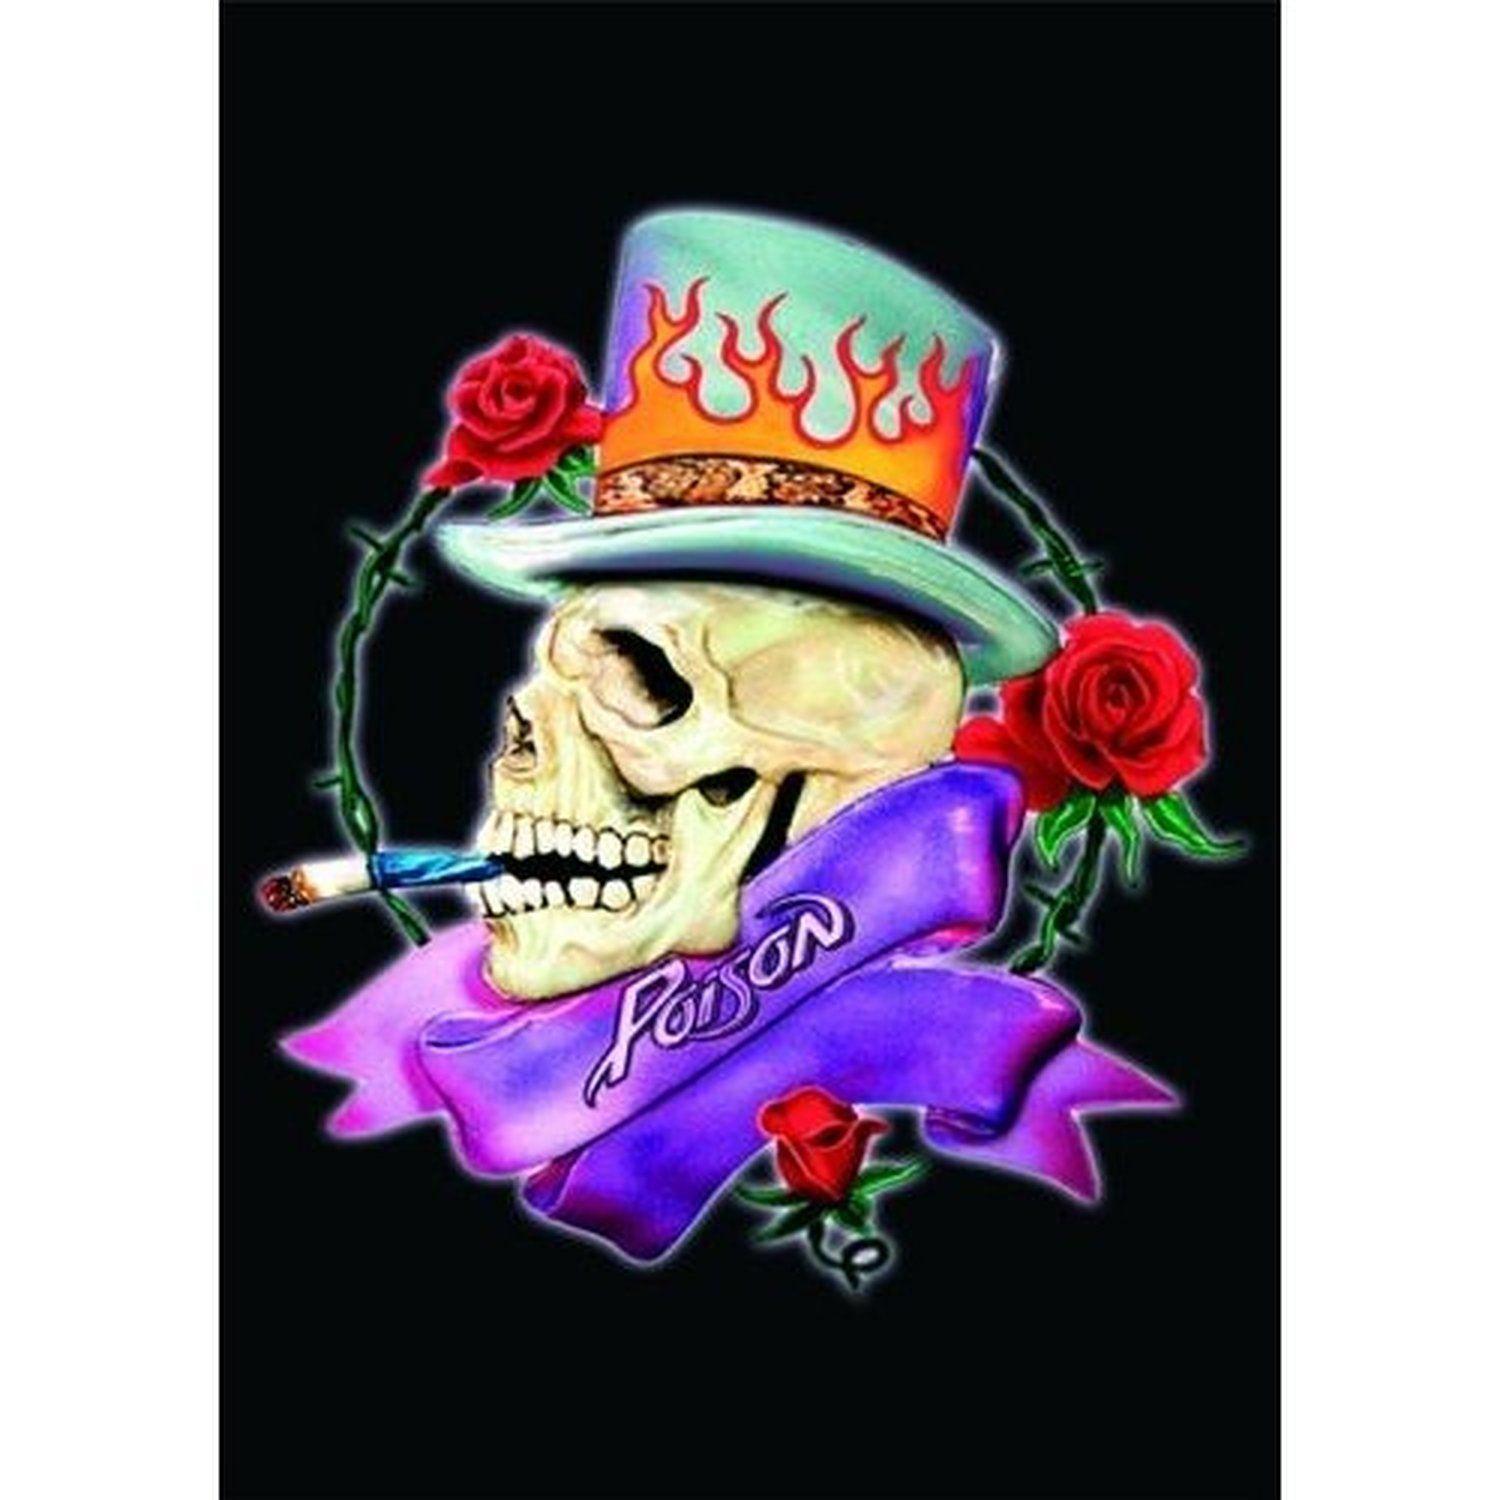 Poison Band Logo - Poison Smoking Skull Band Logo Postcard Picture Album Cover Image